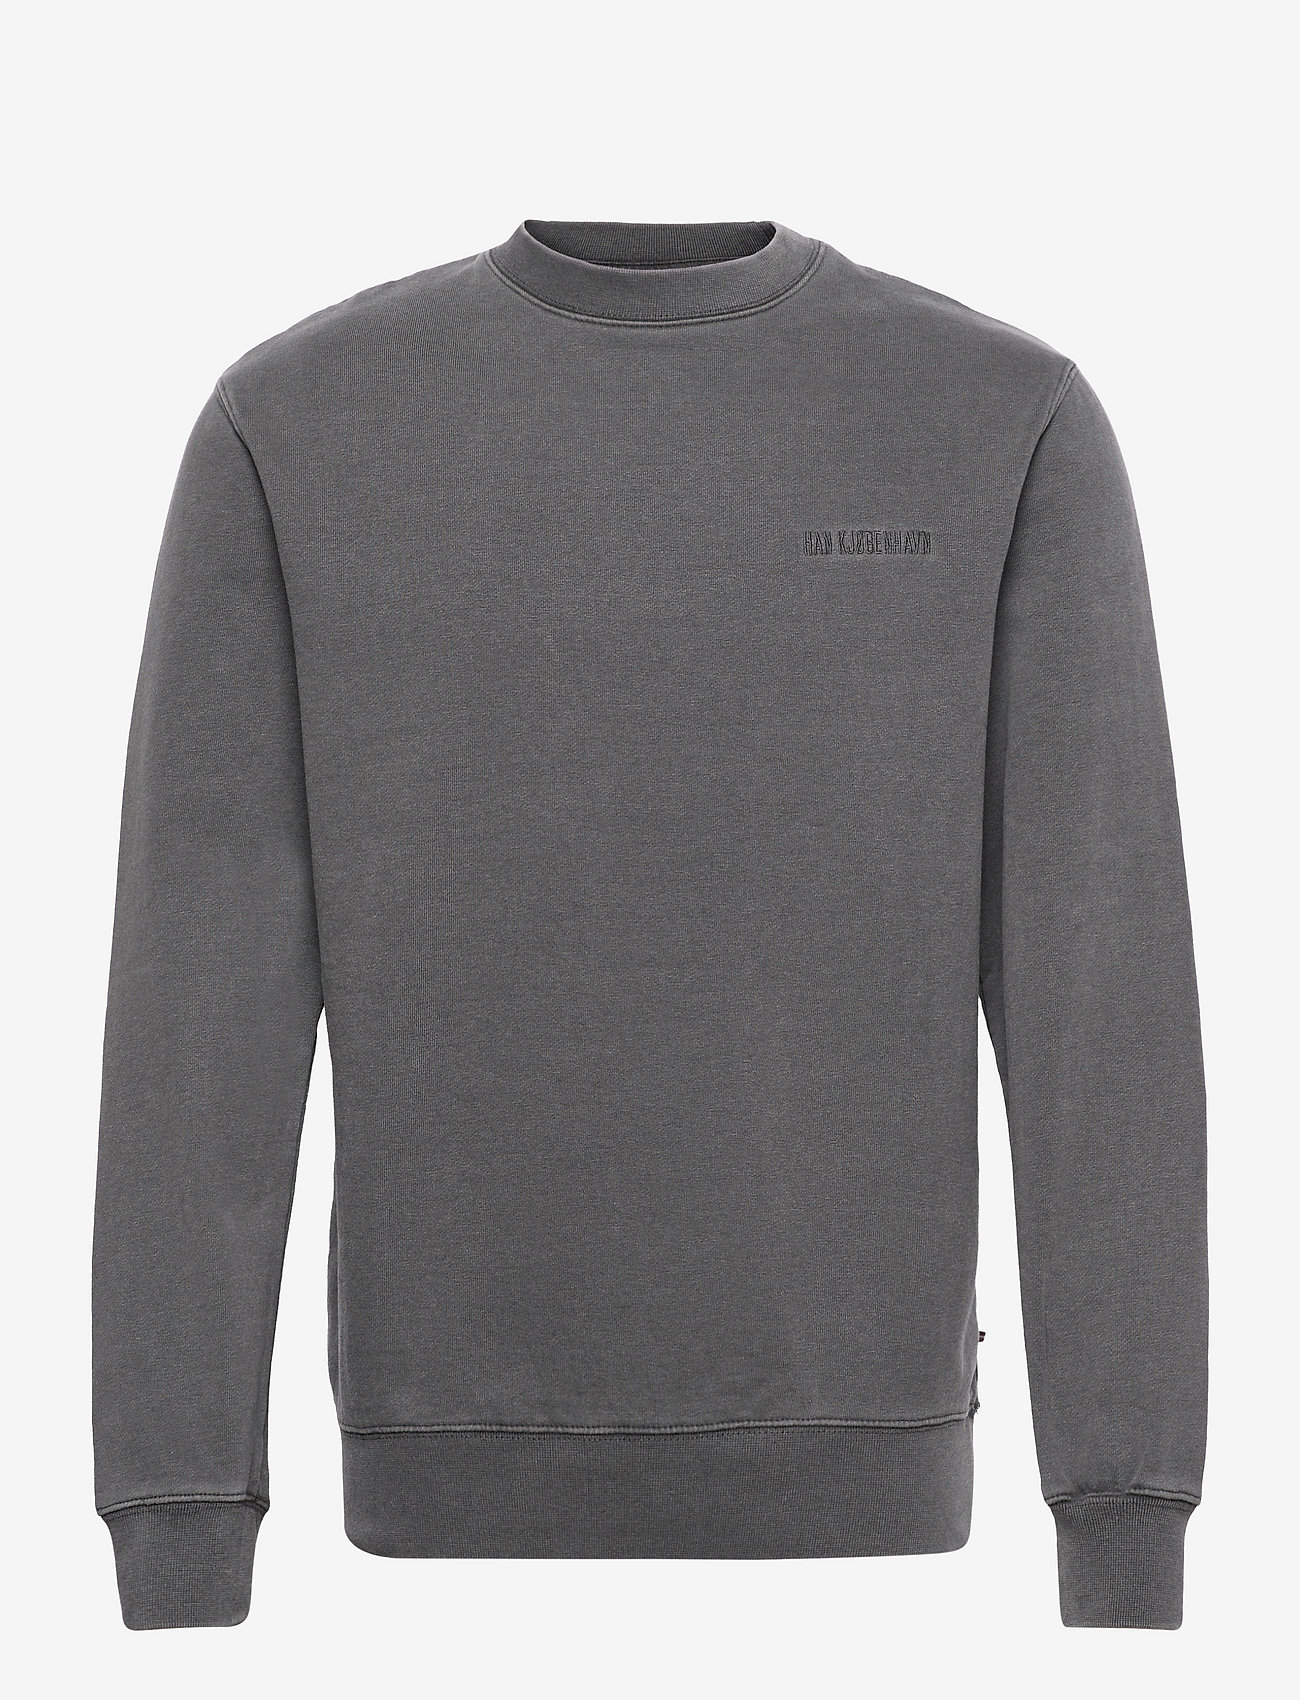 HAN Kjøbenhavn - Casual Crew - hoodies - dark grey logo - 0